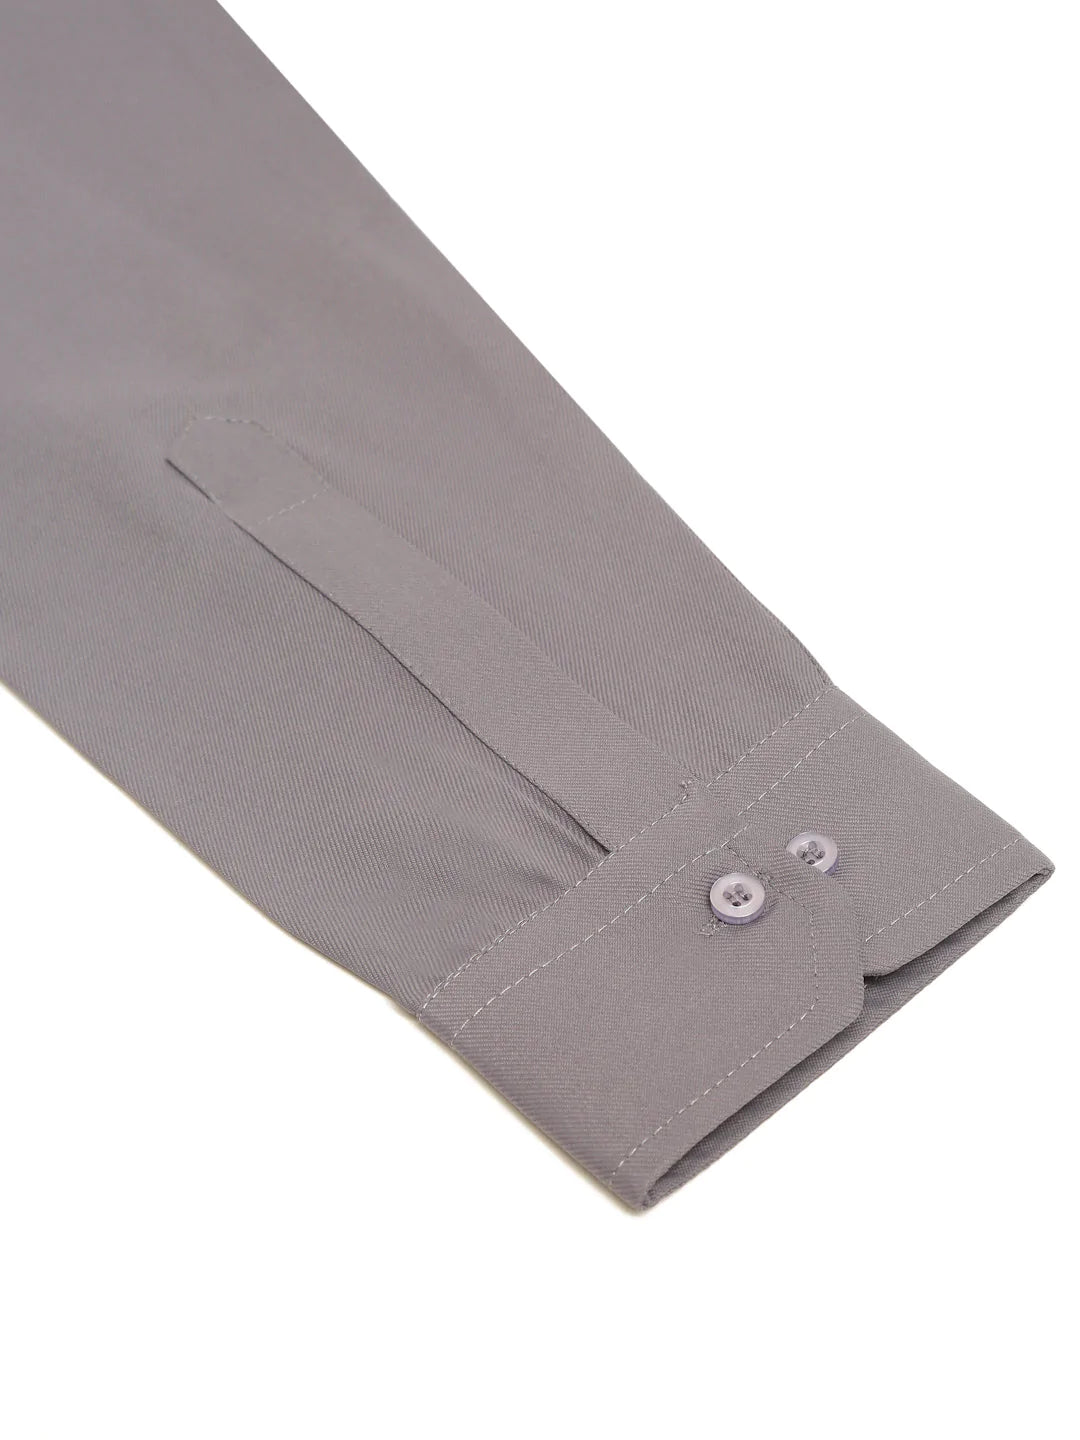 Jompers Men's Grey Solid Cotton Short Kurta ( KO 677 Grey )